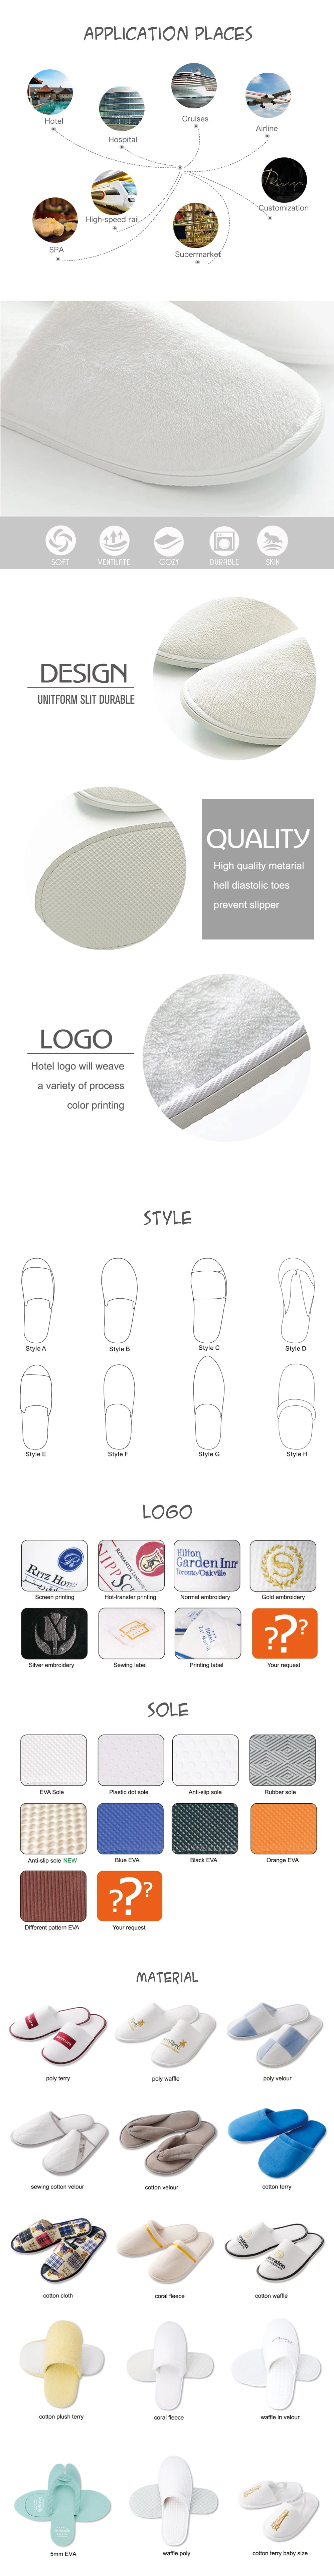 Custom Printing Promotional Beach EVA Sandal Fashion Flip Flops Slippers